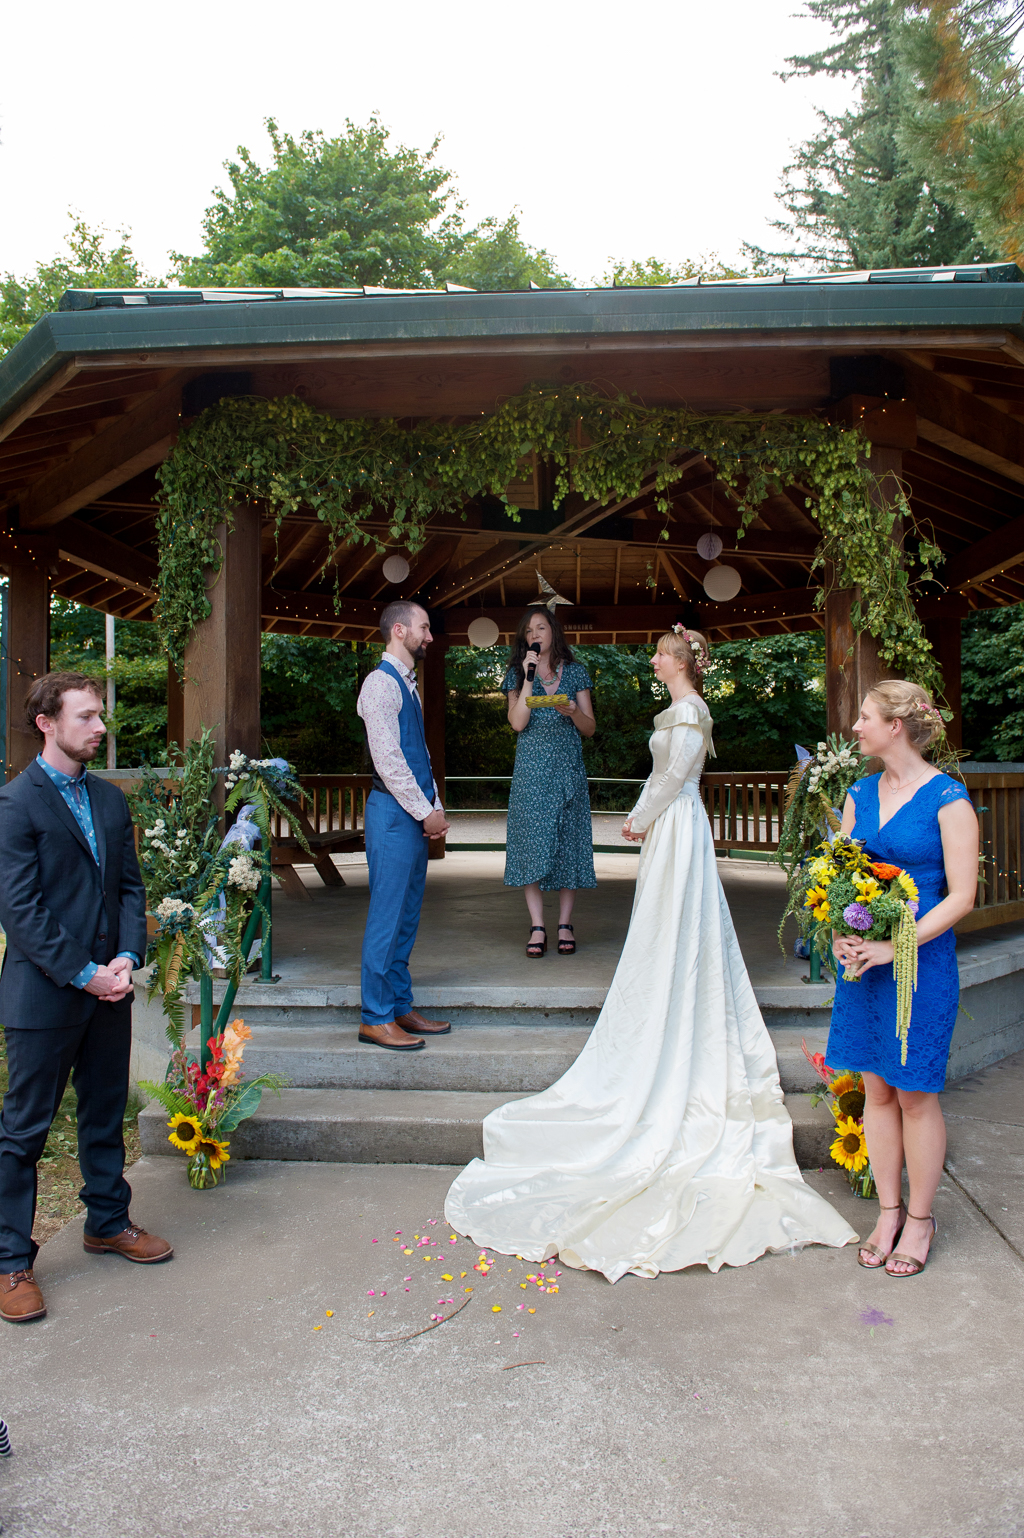 wedding ceremony under the gazebo at Hawkins Park